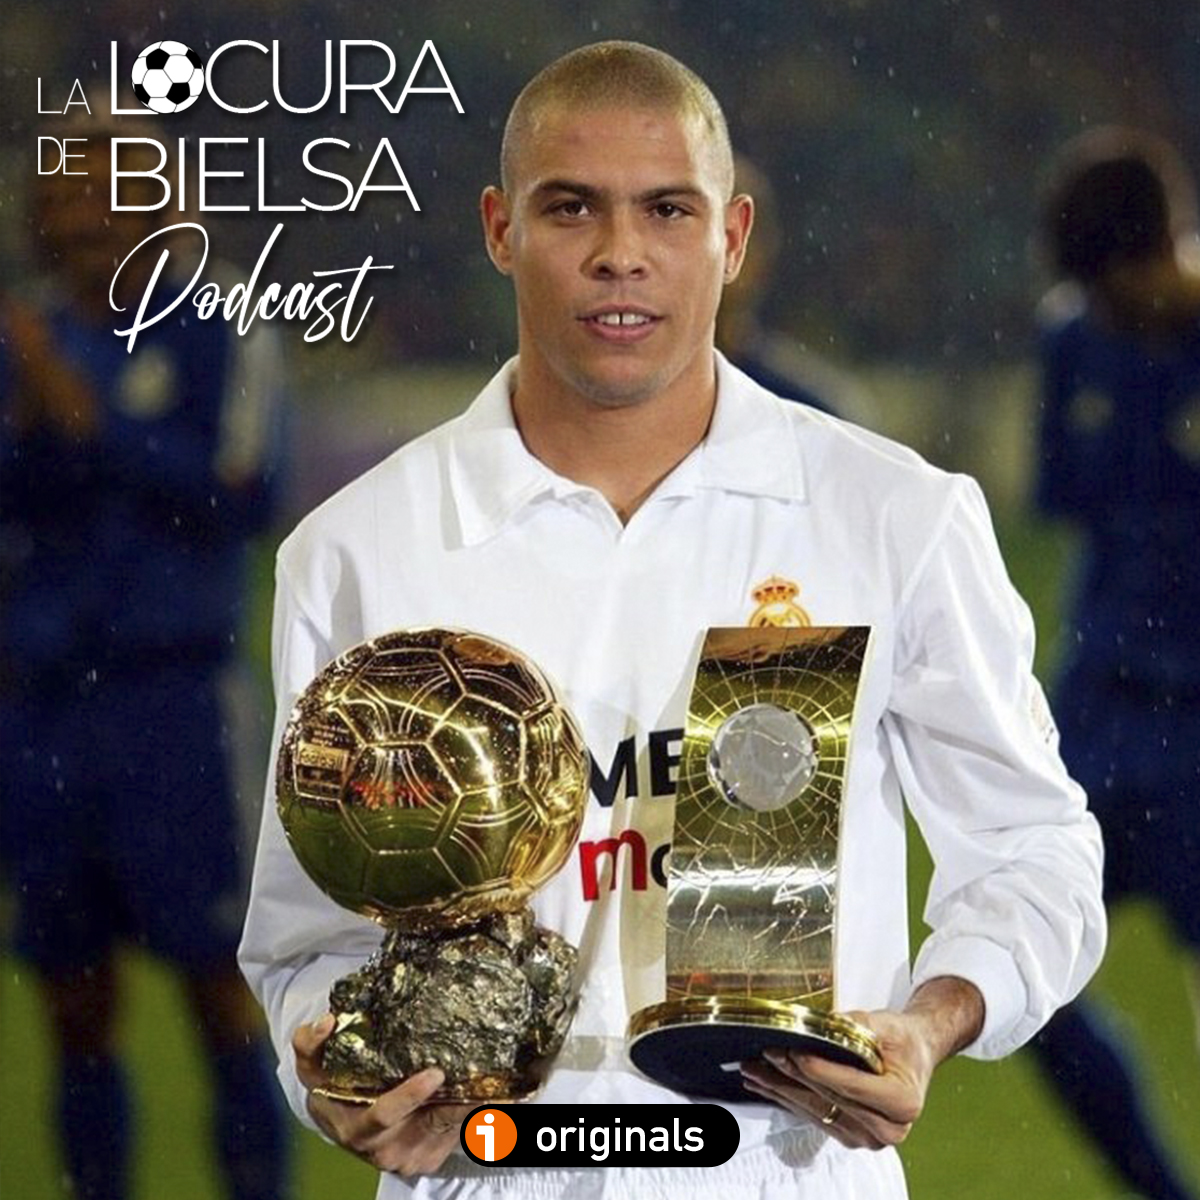 Ronaldo año 2002 locura de bielsa portada